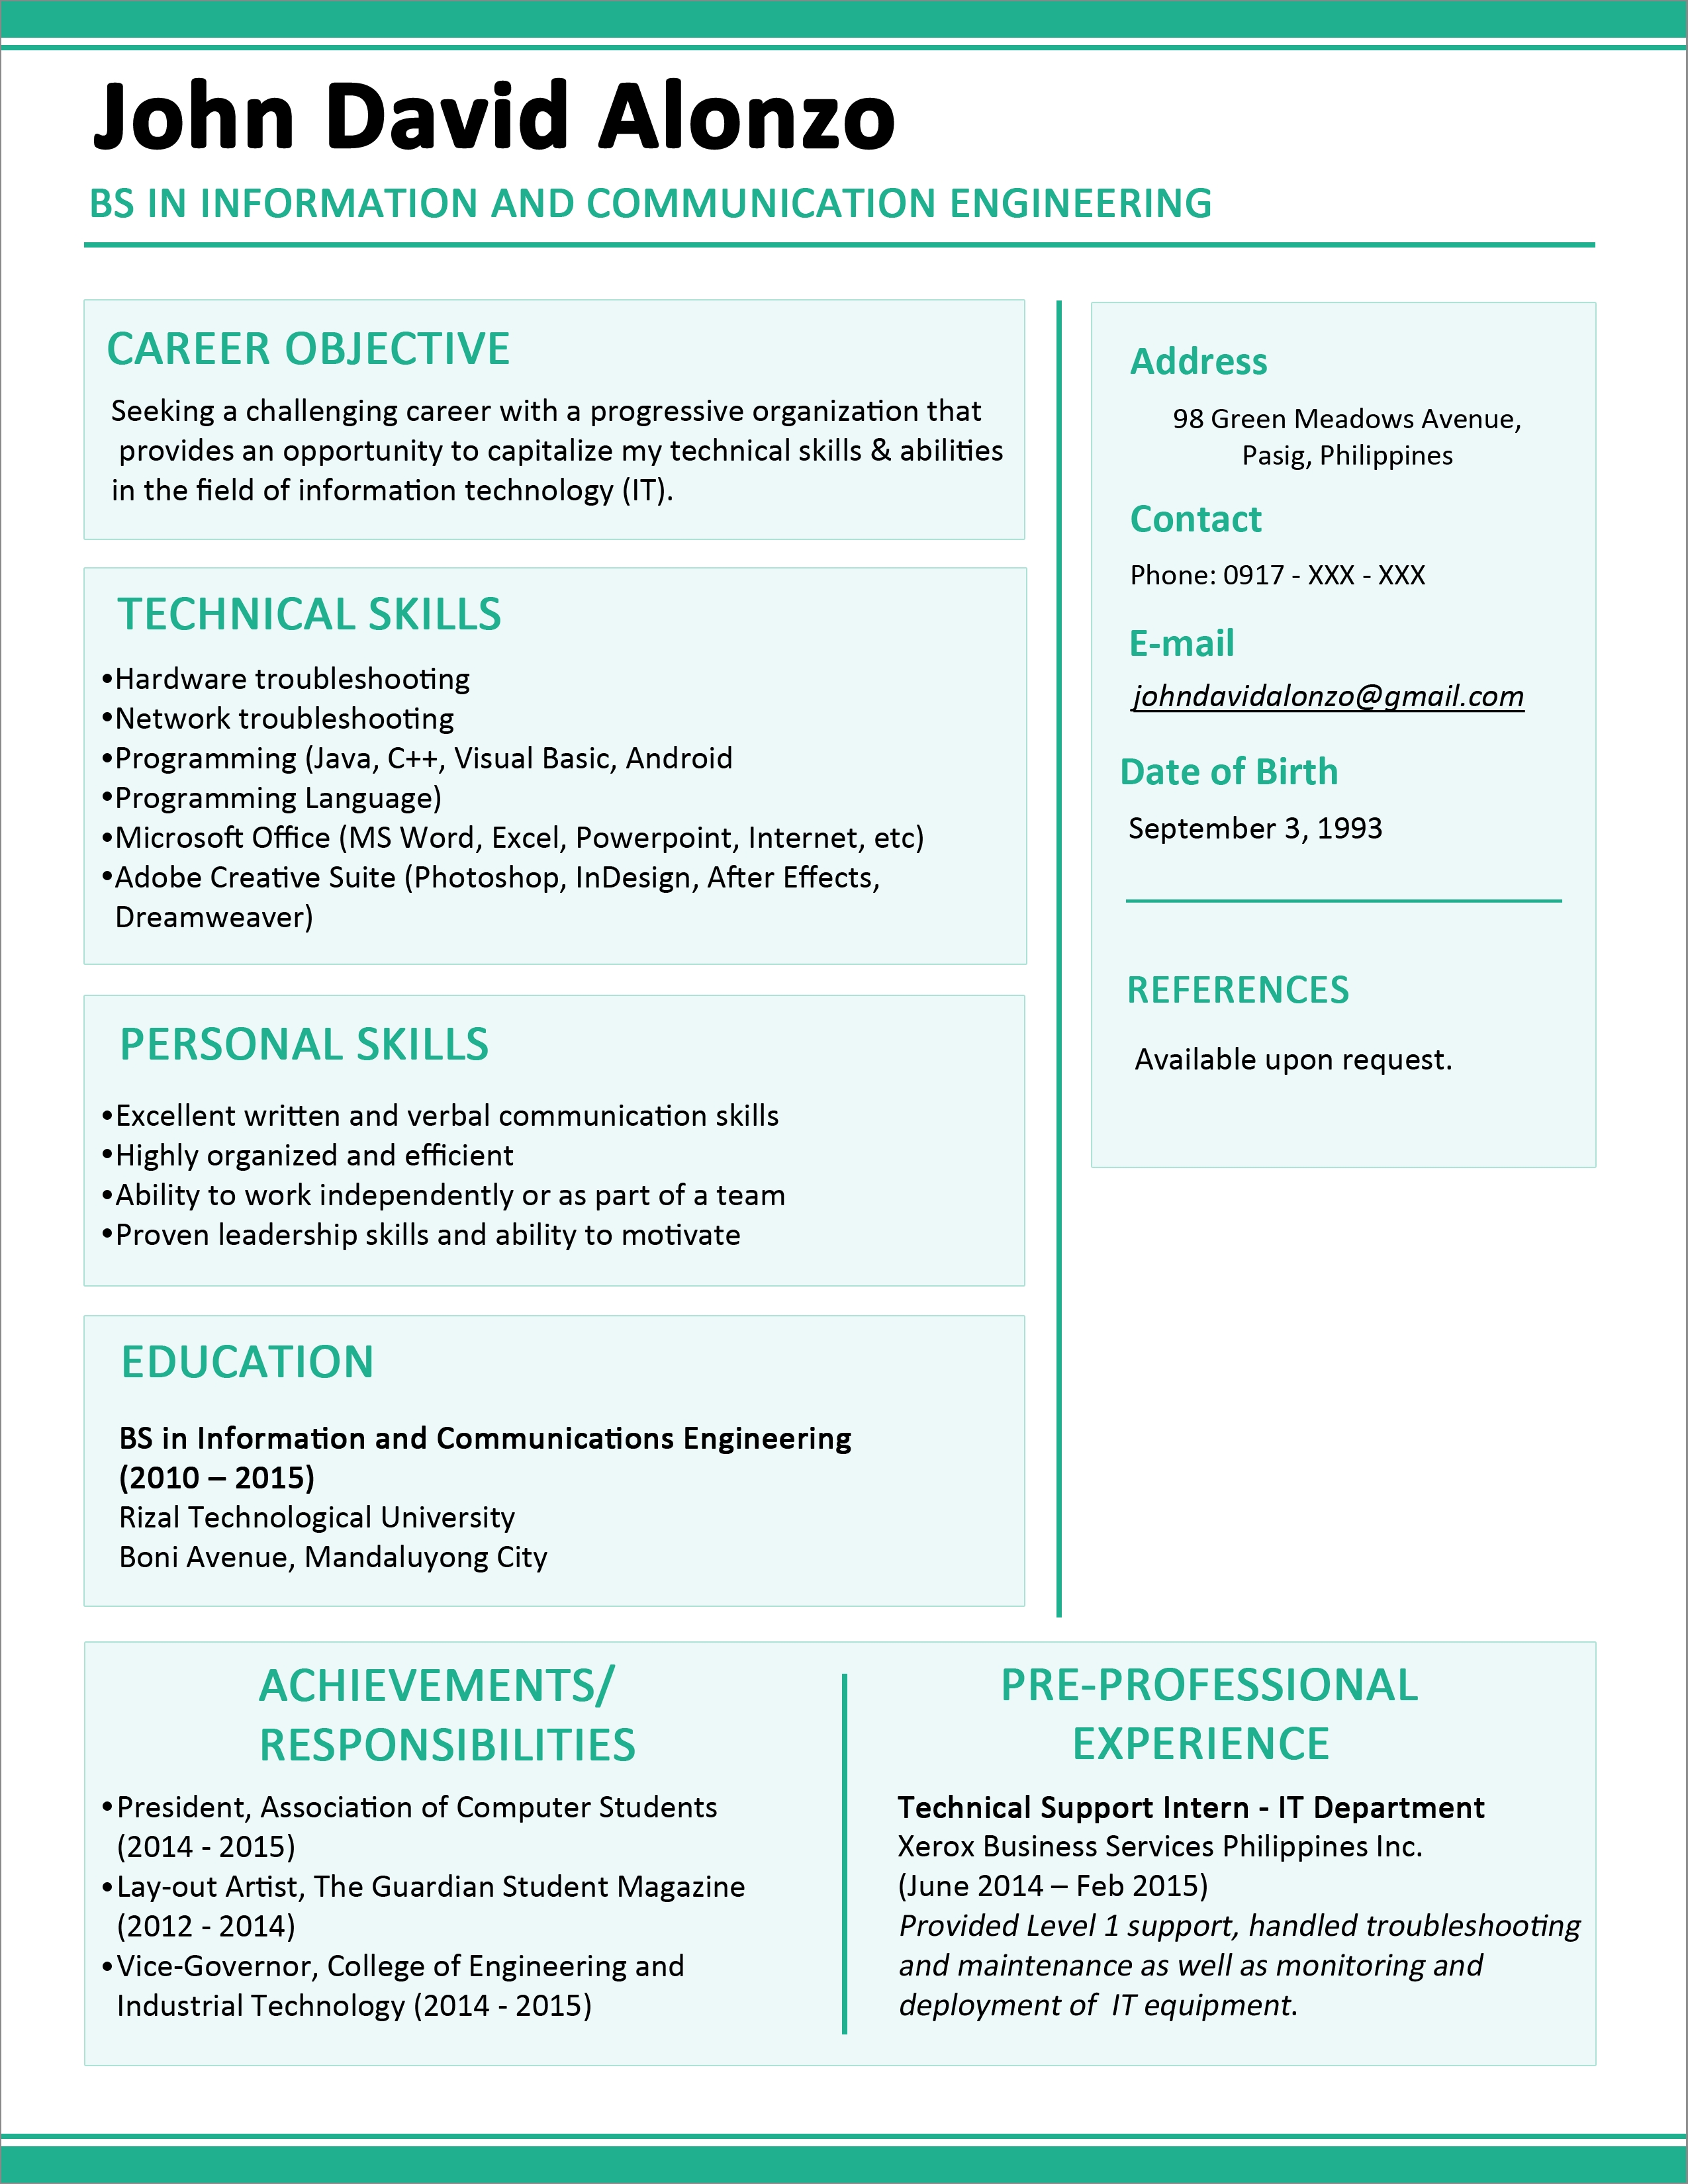 Resume Format One Job 